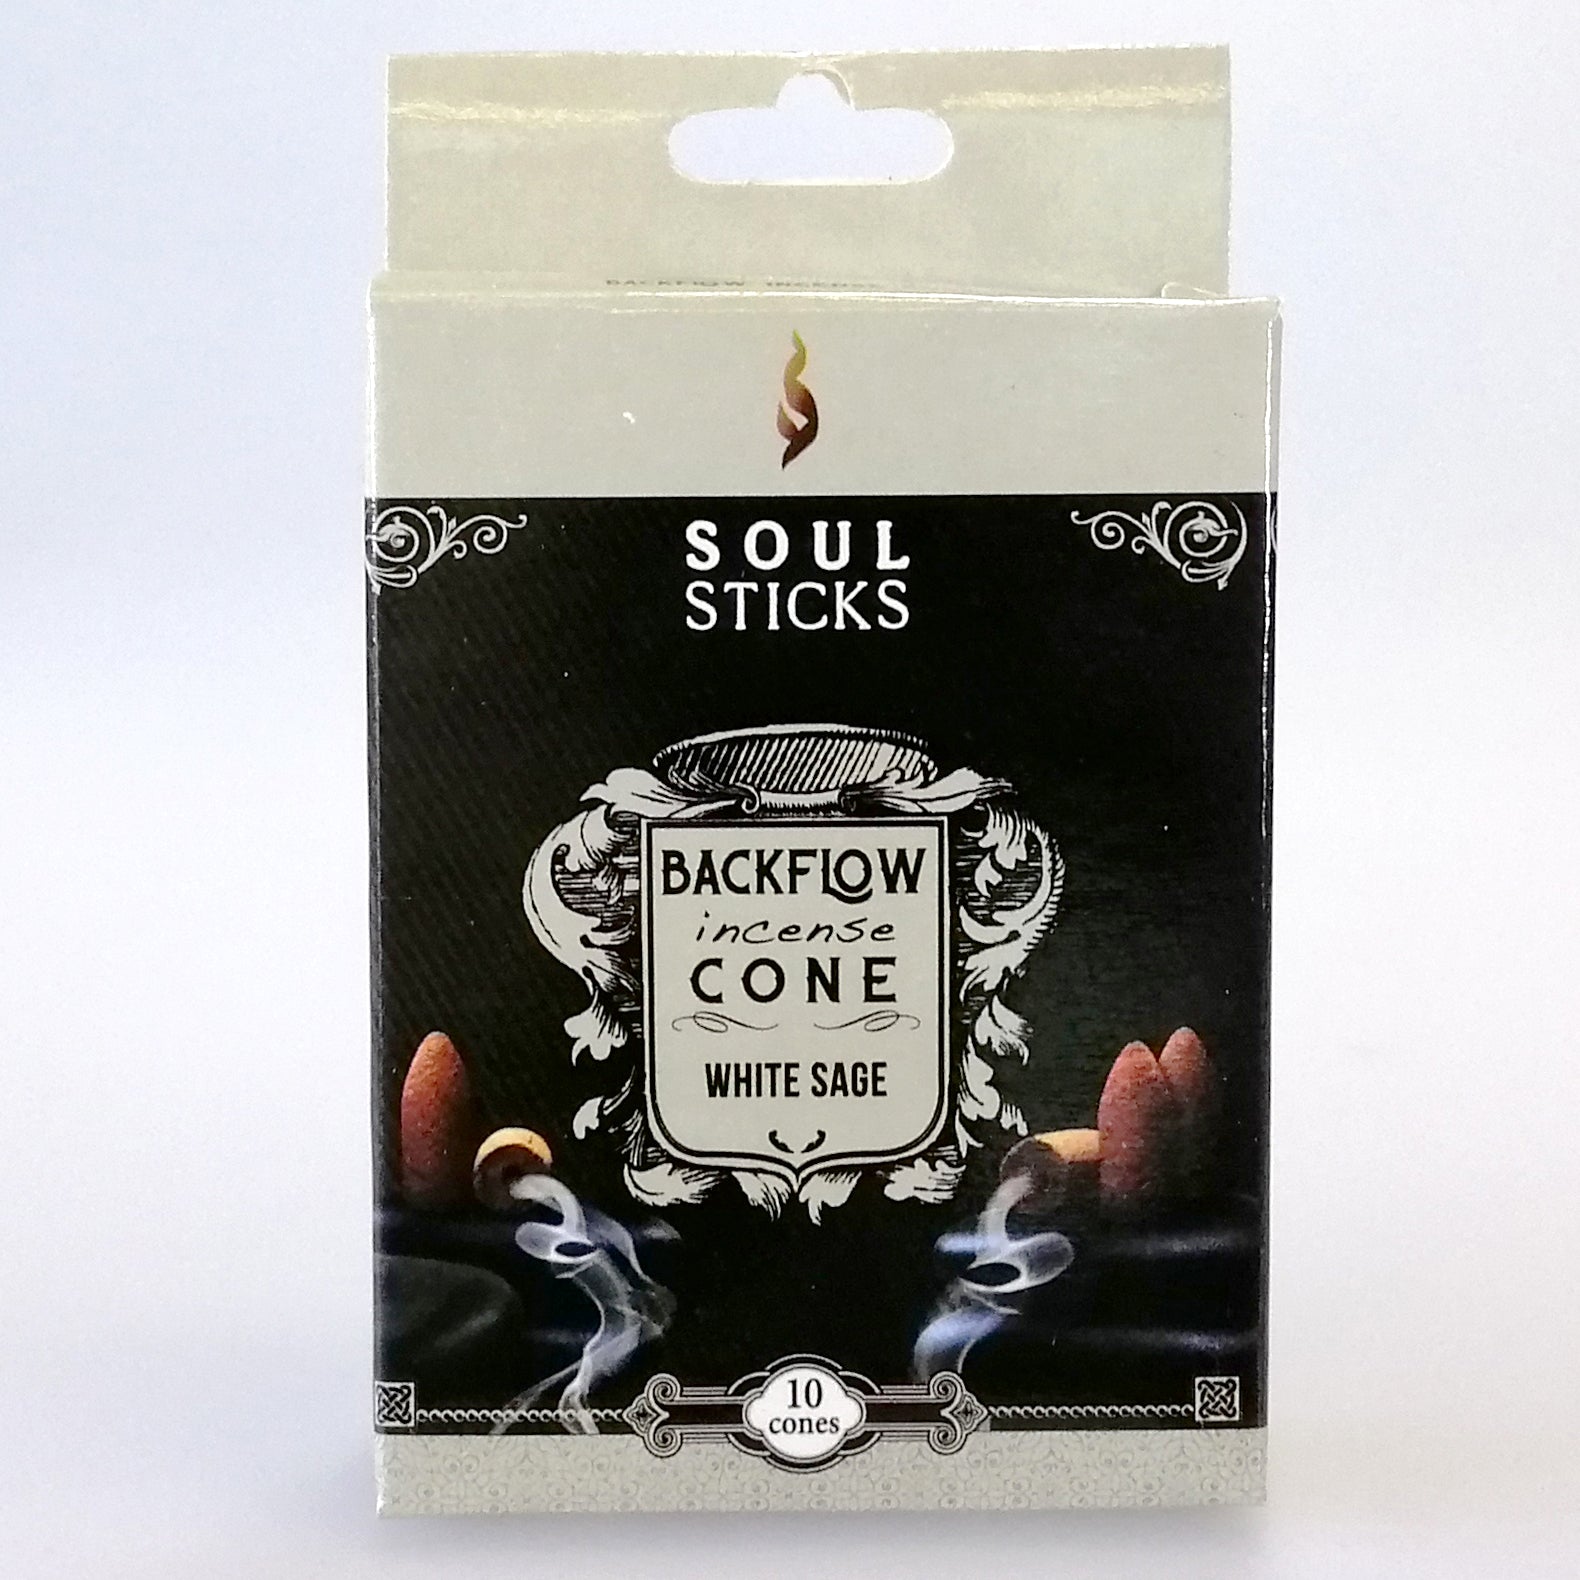 Soul Sticks Backflow Incense Cones - White Sage